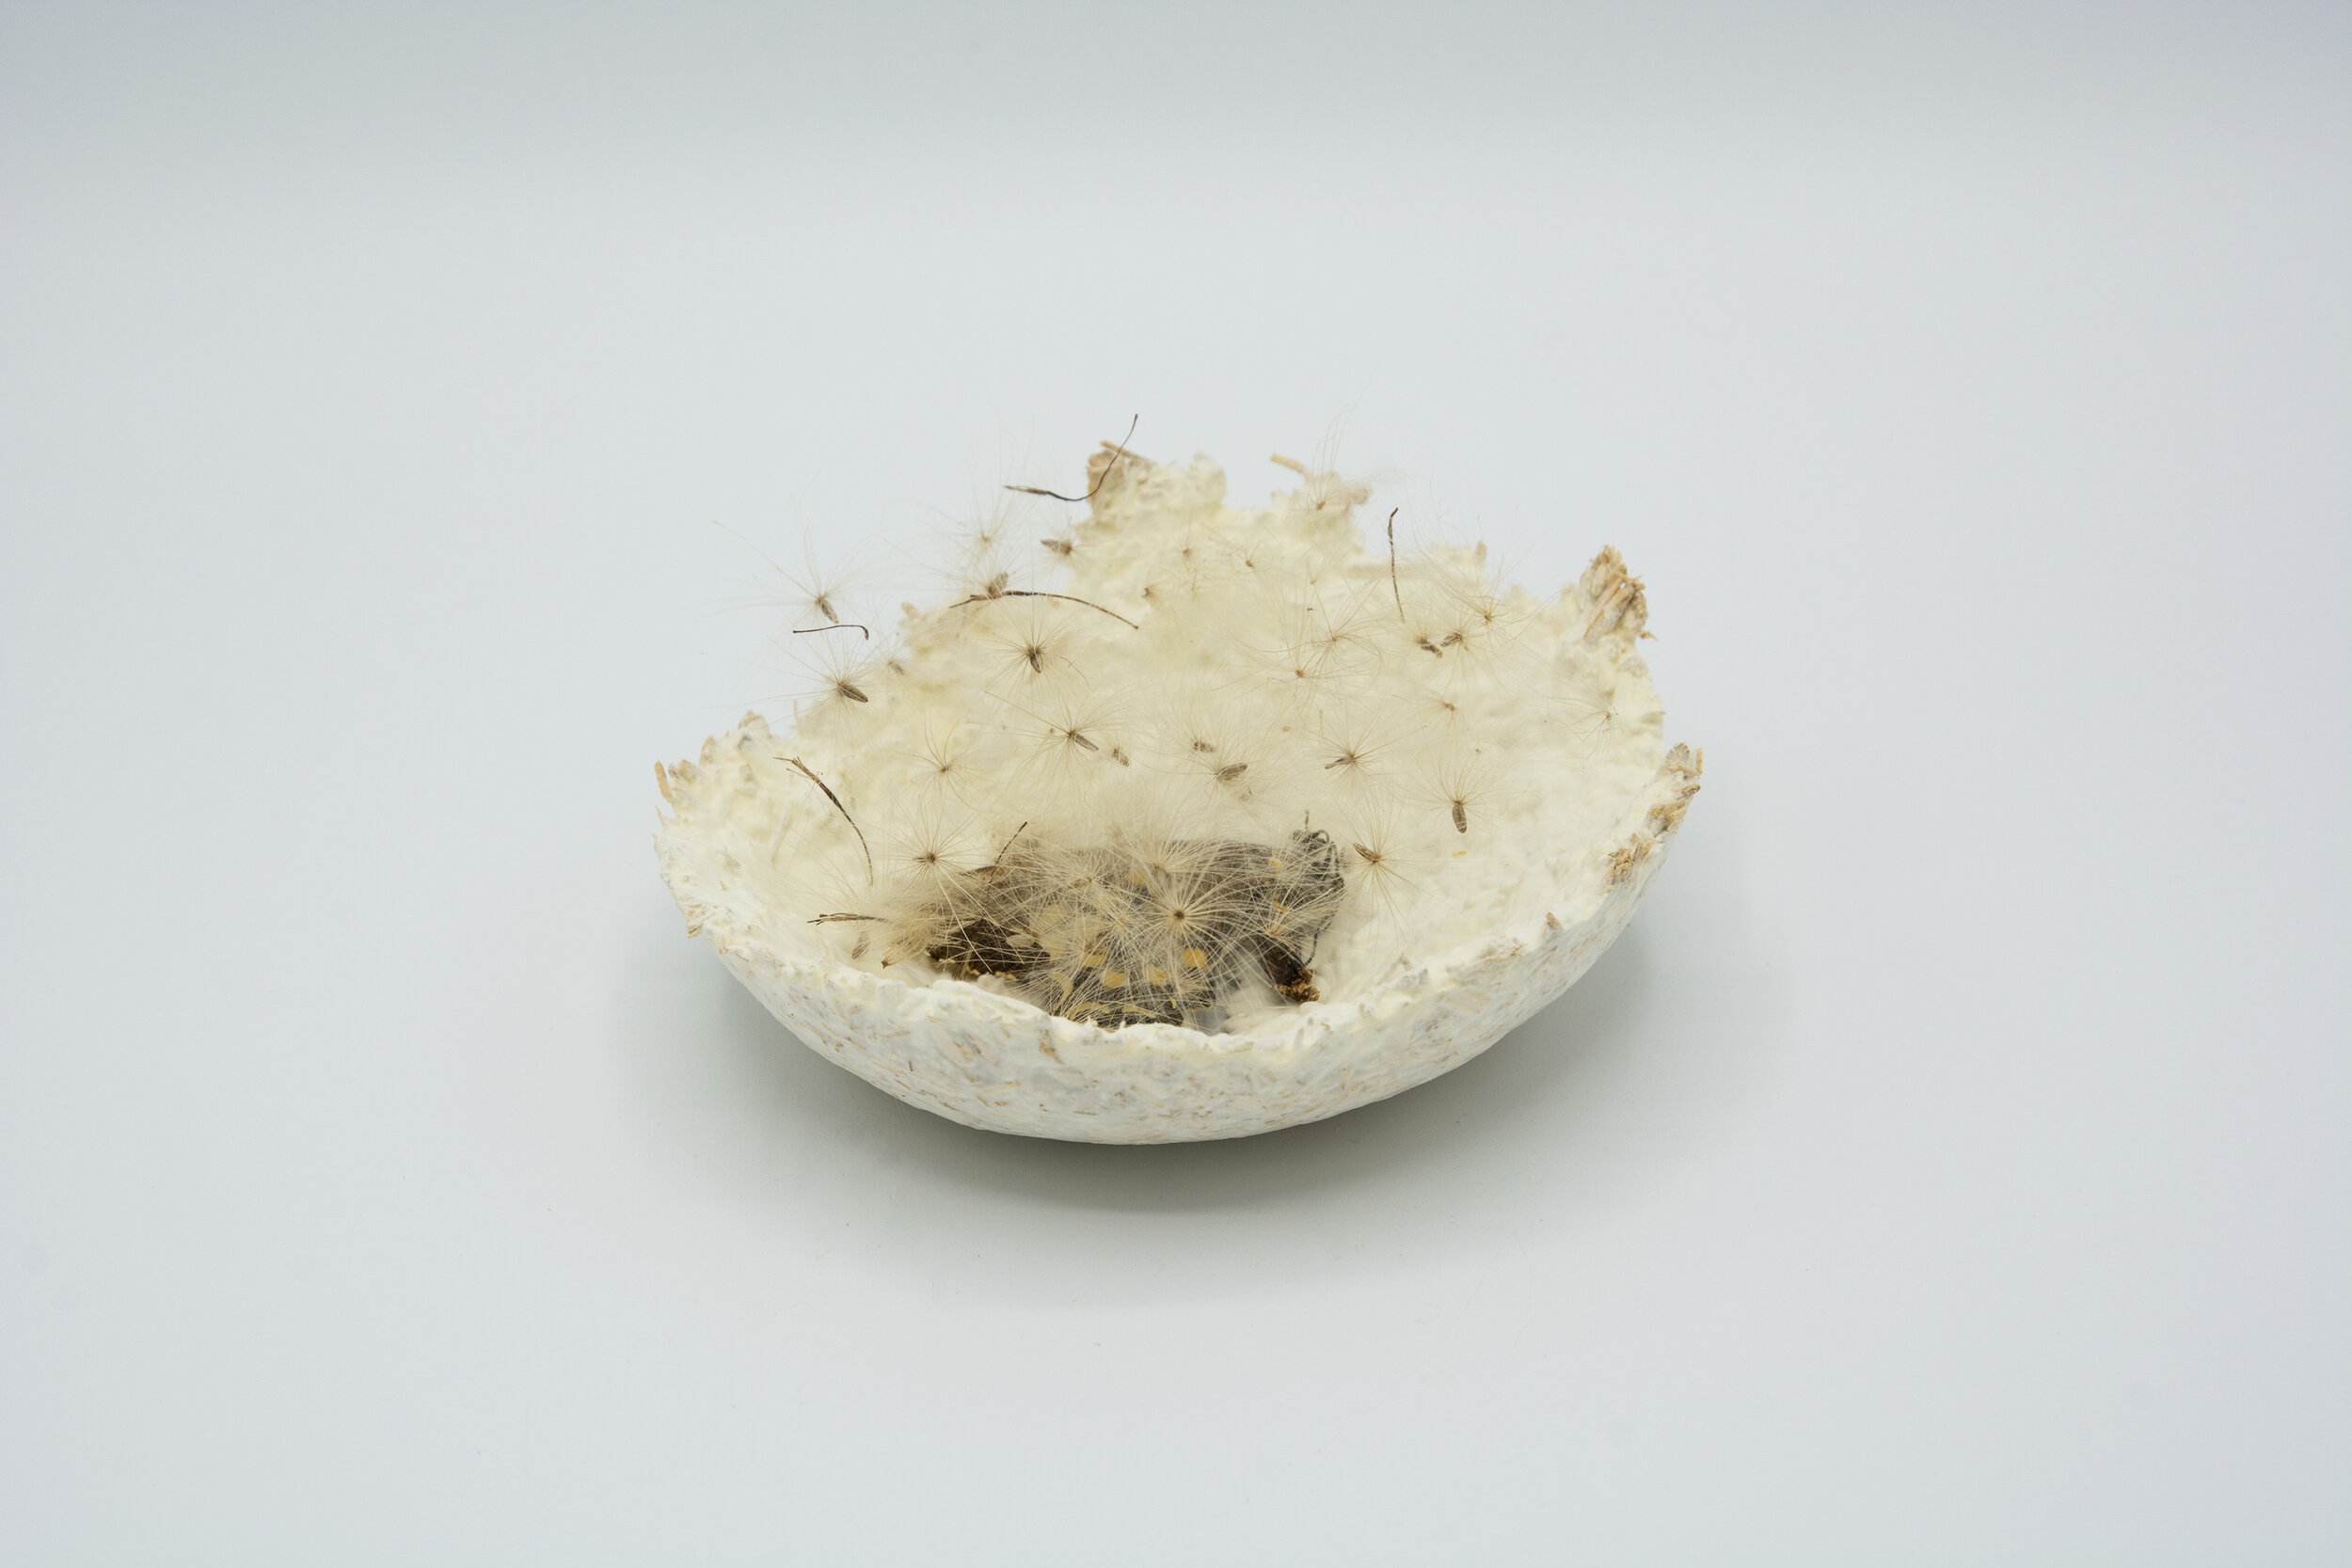  Kelly M O'Brien, One Meter Quadrat, detail. Mycelium, thistle seed heads, butterfly ©2021 